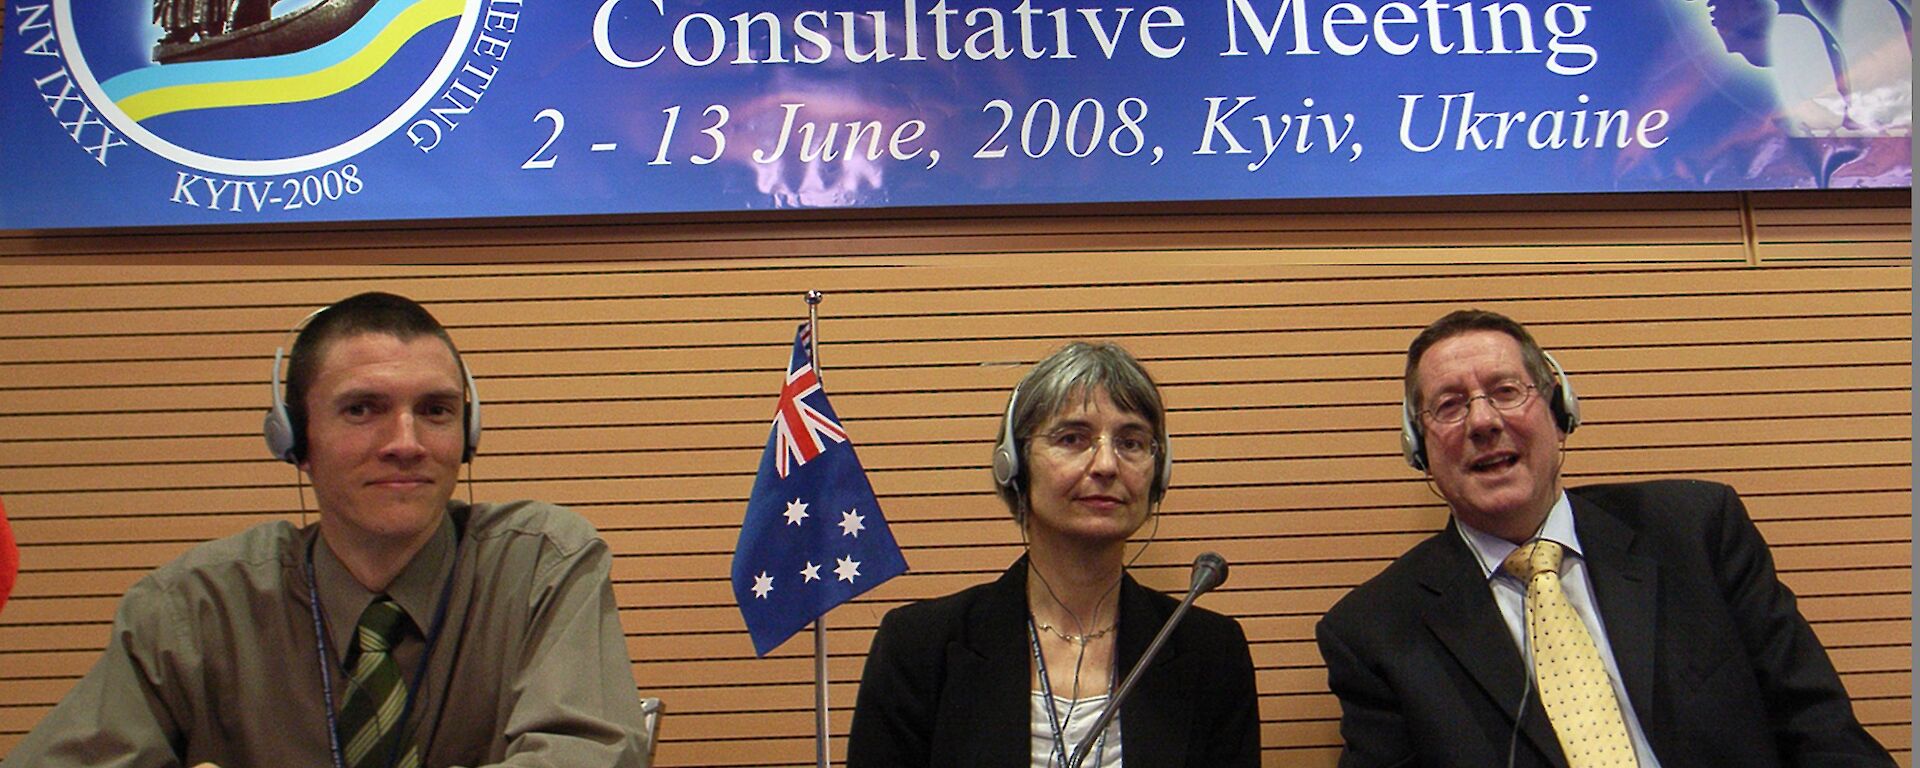 CEP delegates, Ewan McIvor (left), Penny Richards (DFAT) and Tony Press.